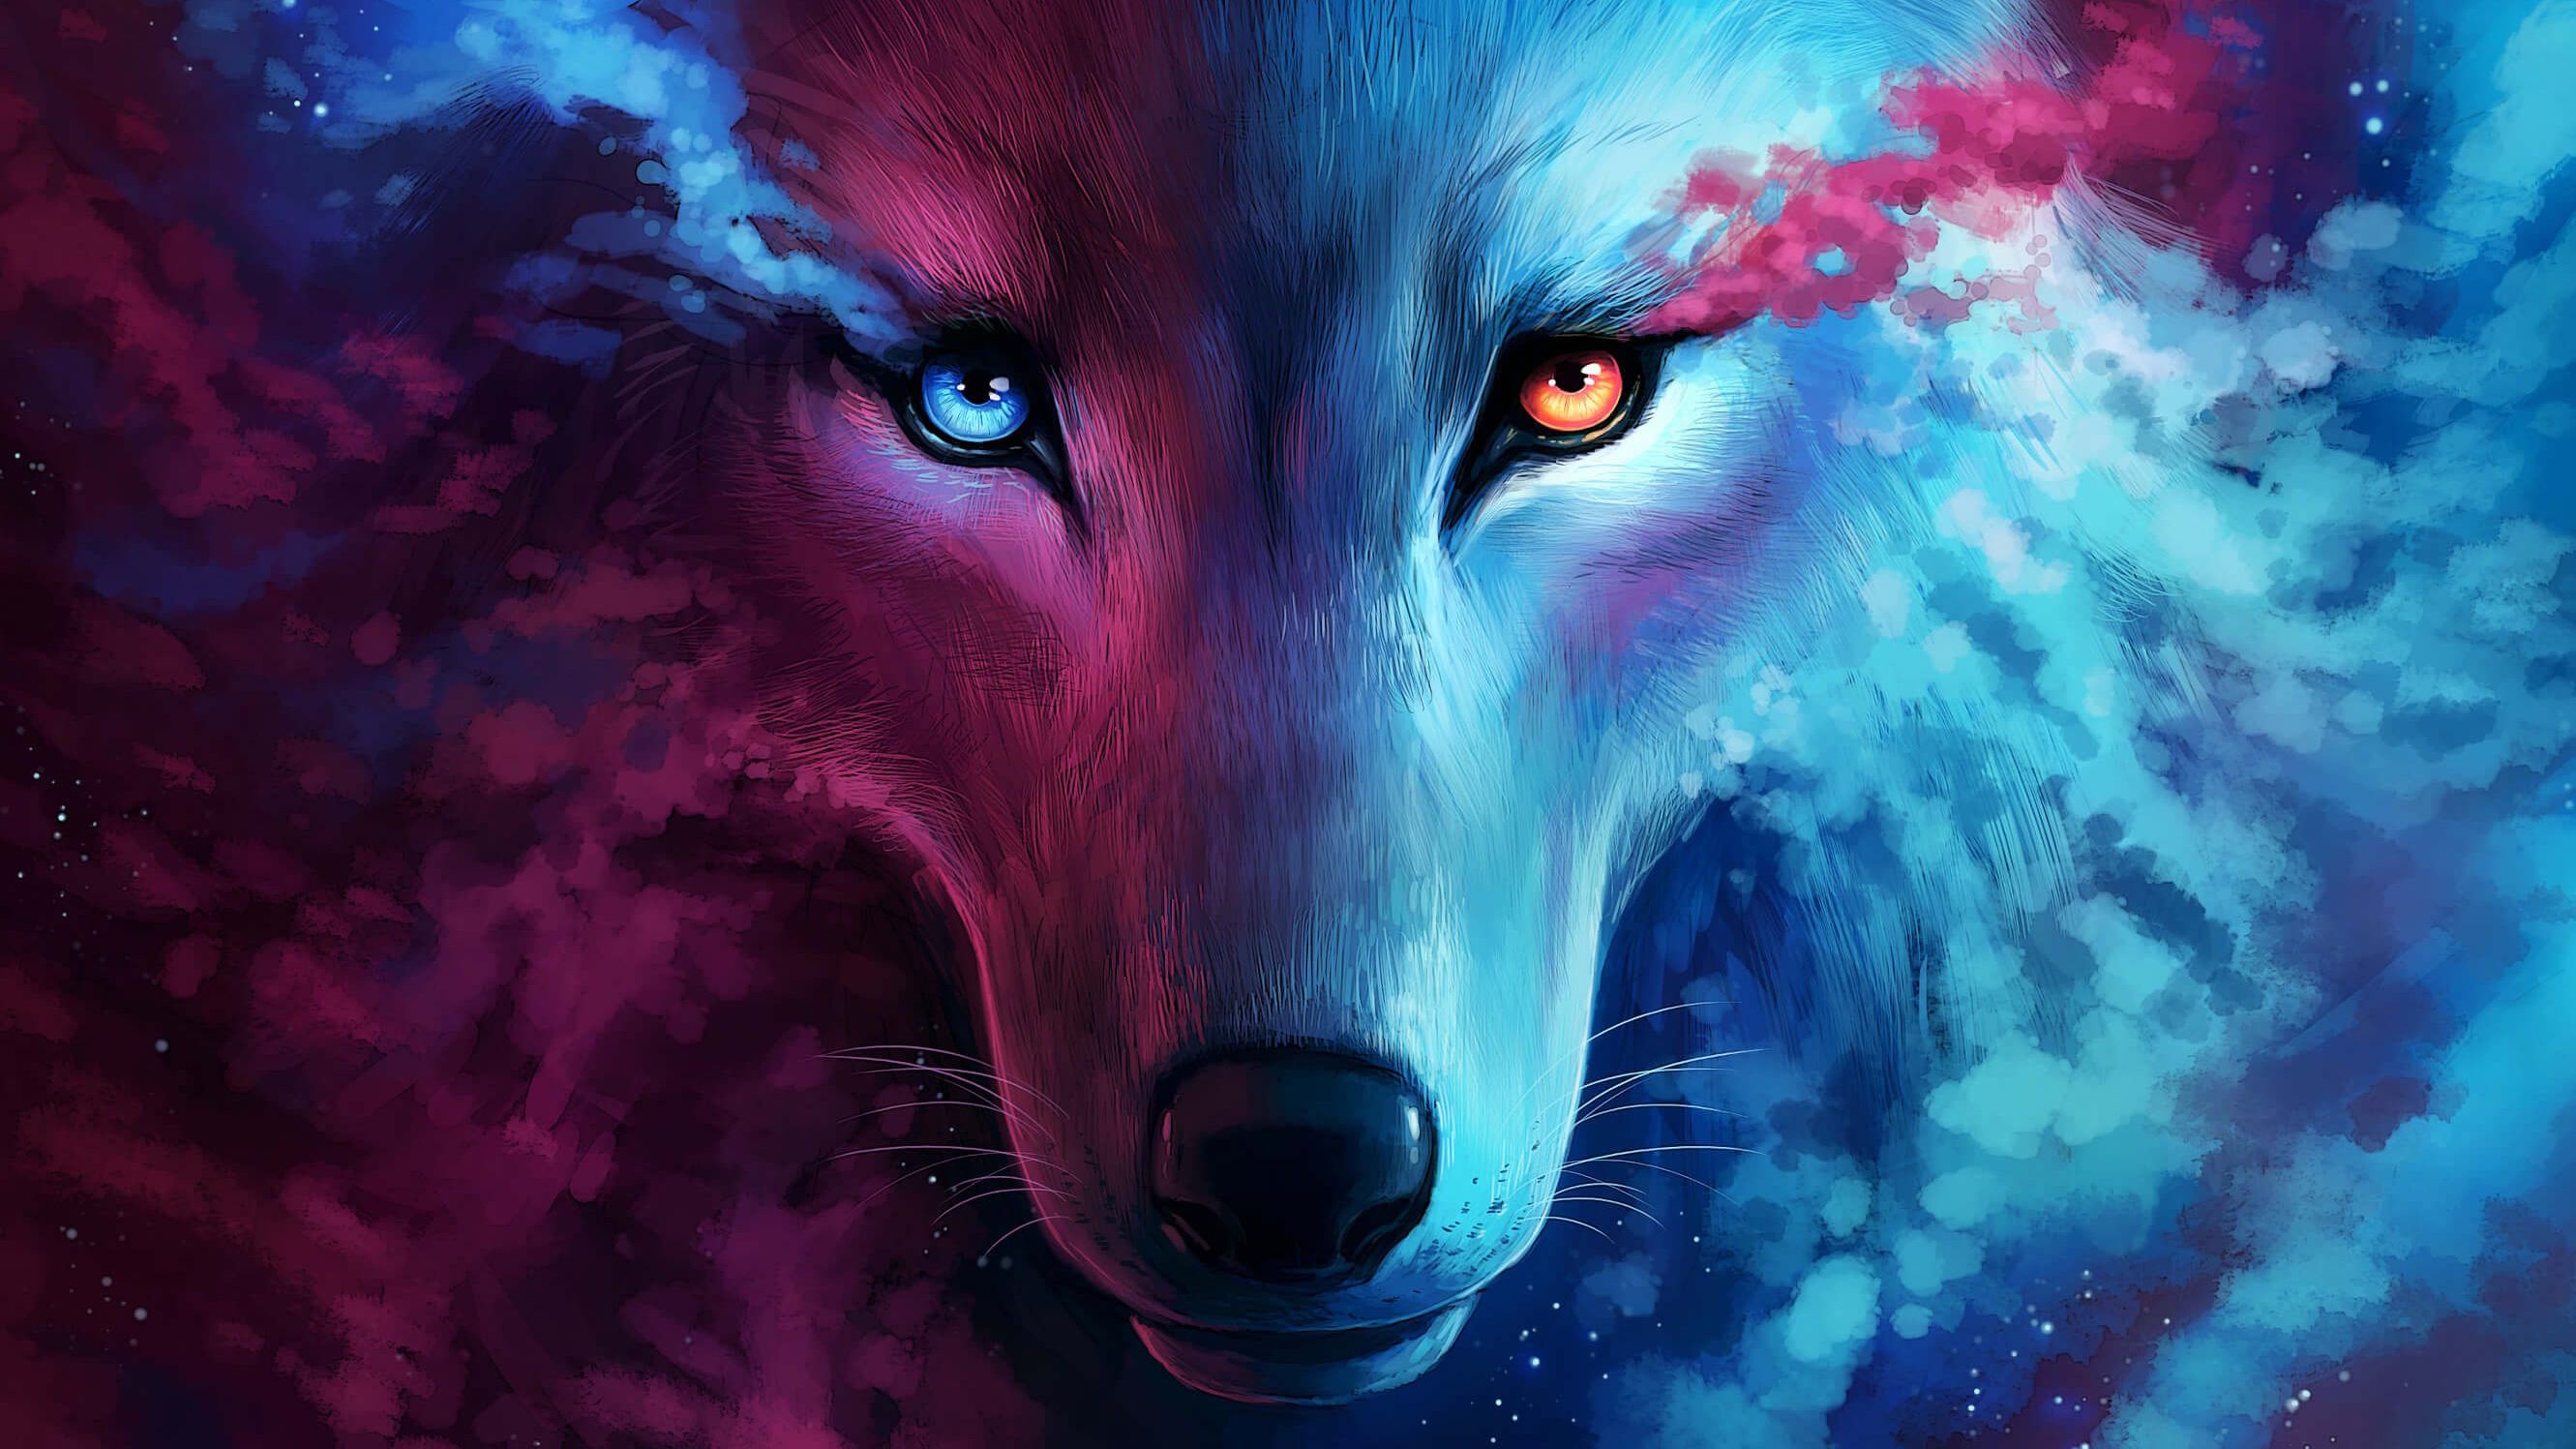 The Galaxy Wolf, HD Artist, 4k Wallpaper, Image, Background